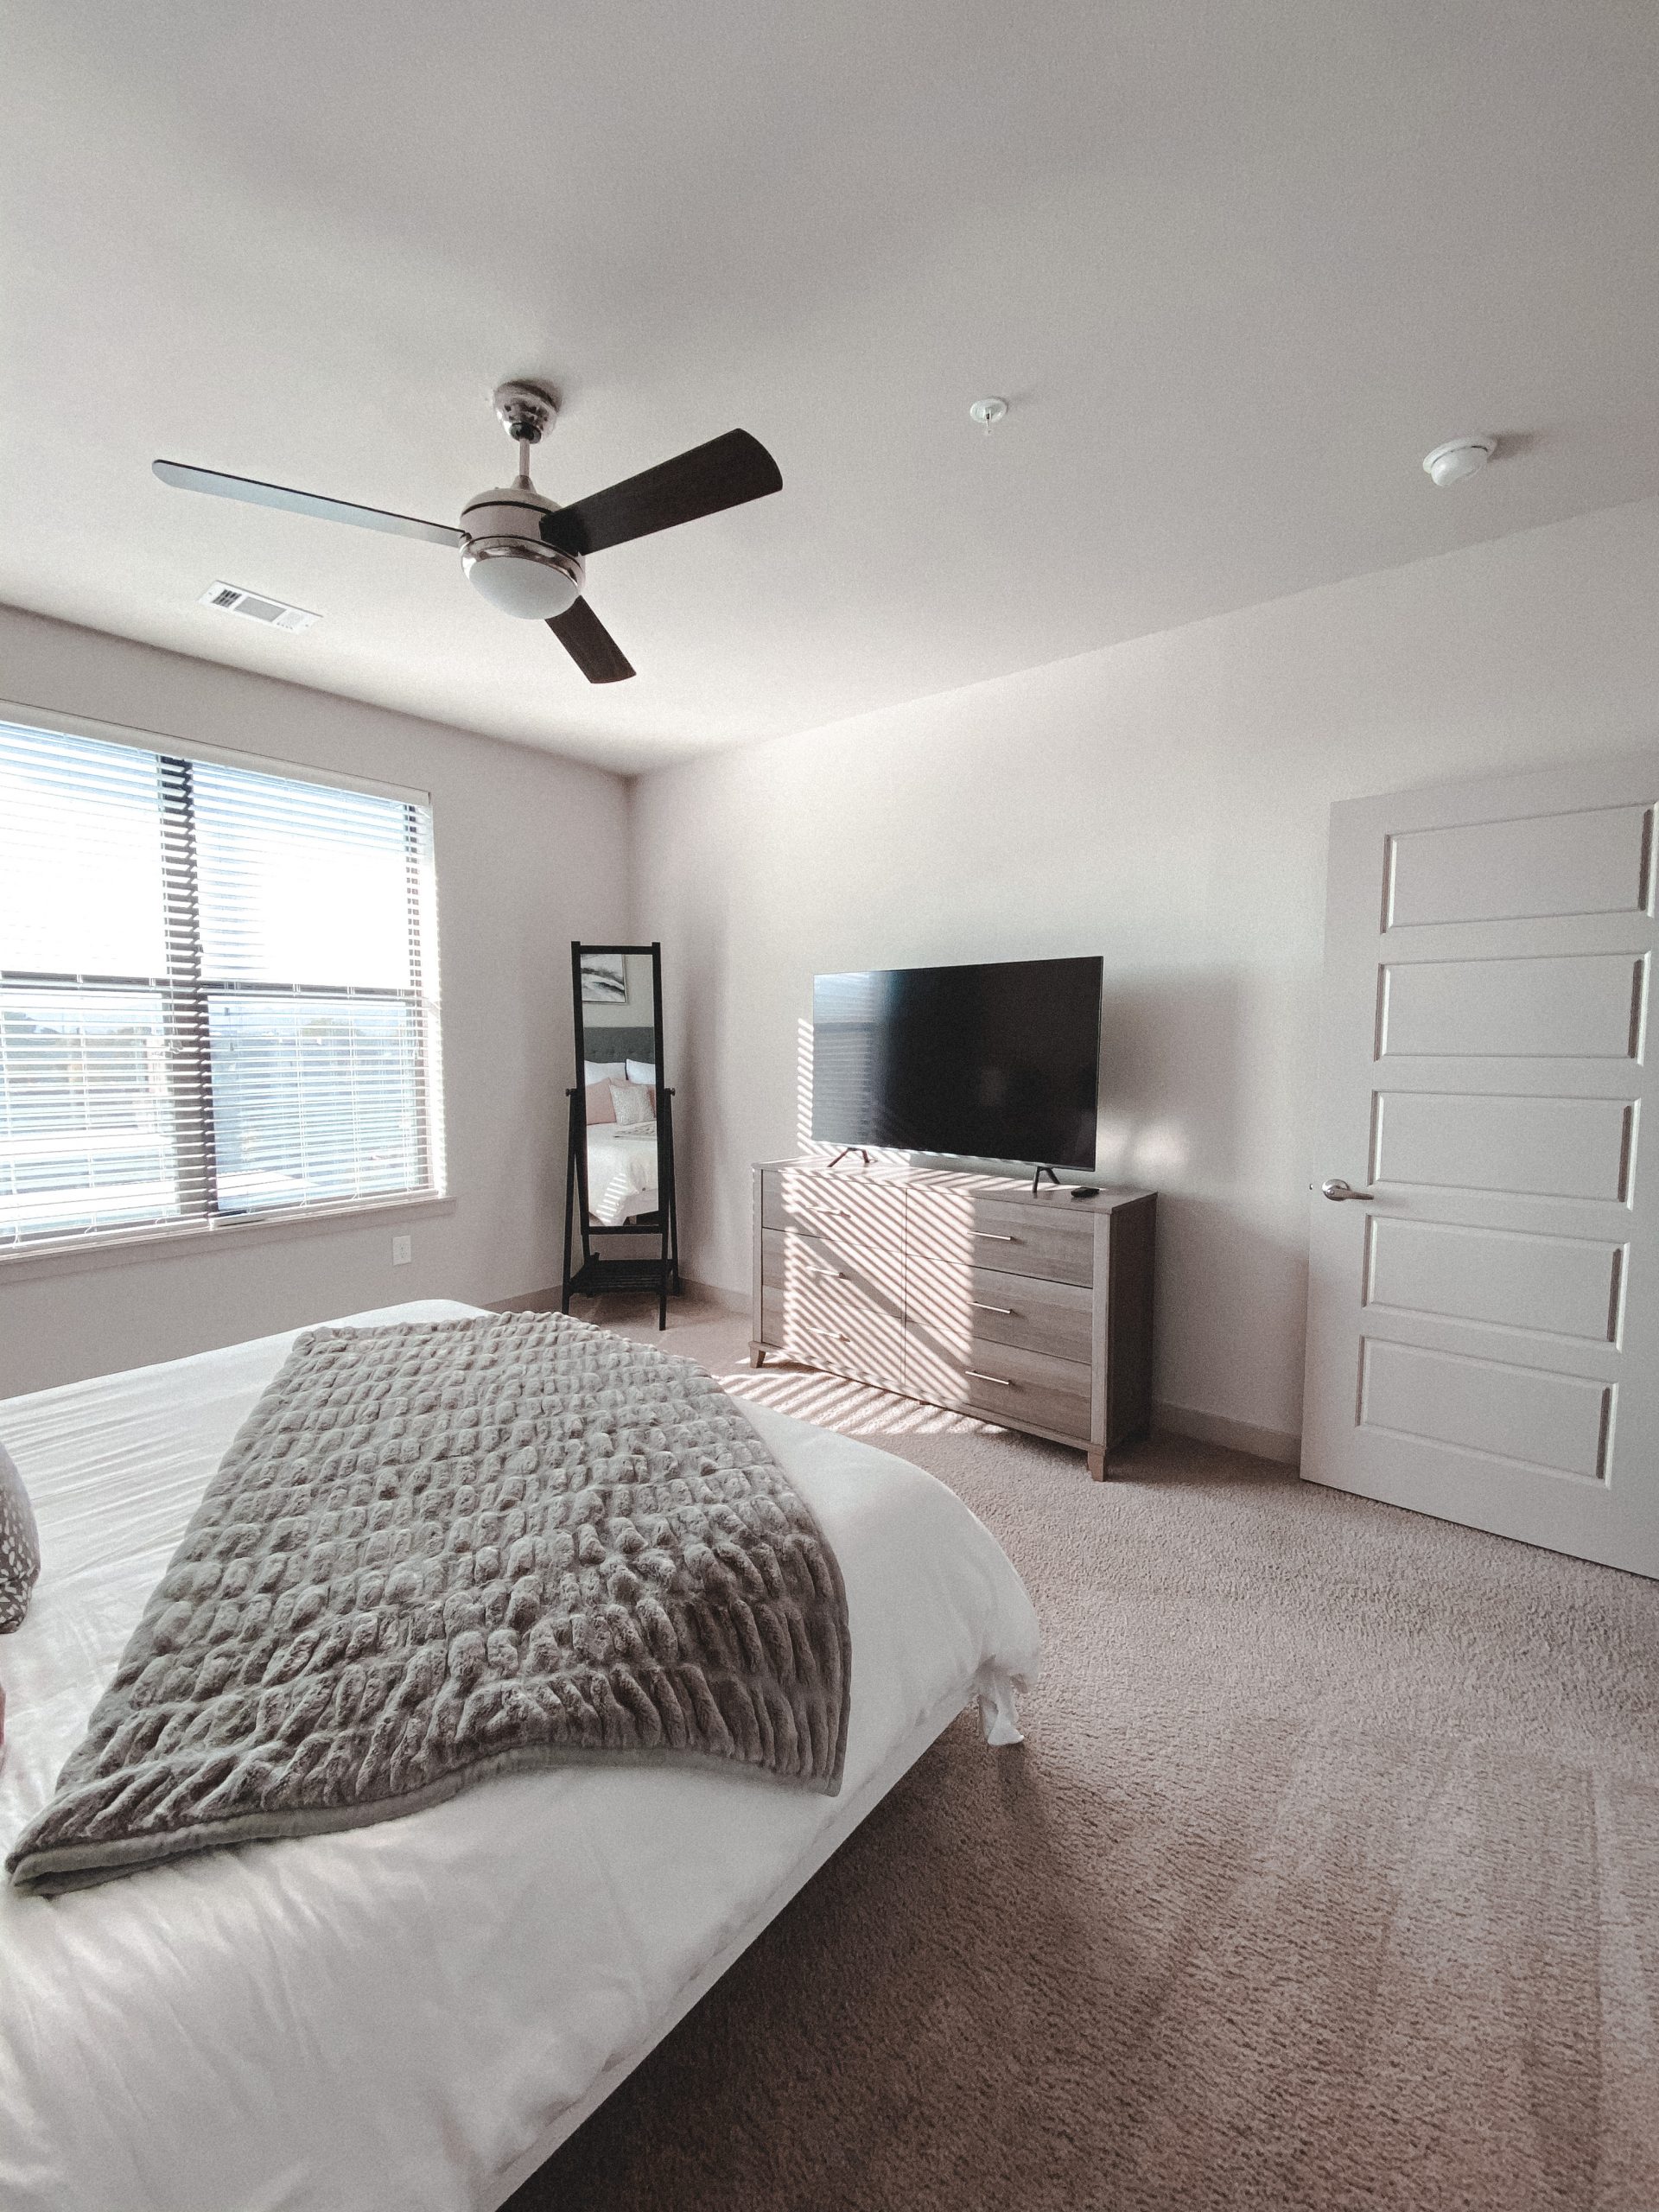 apartment bedroom decor